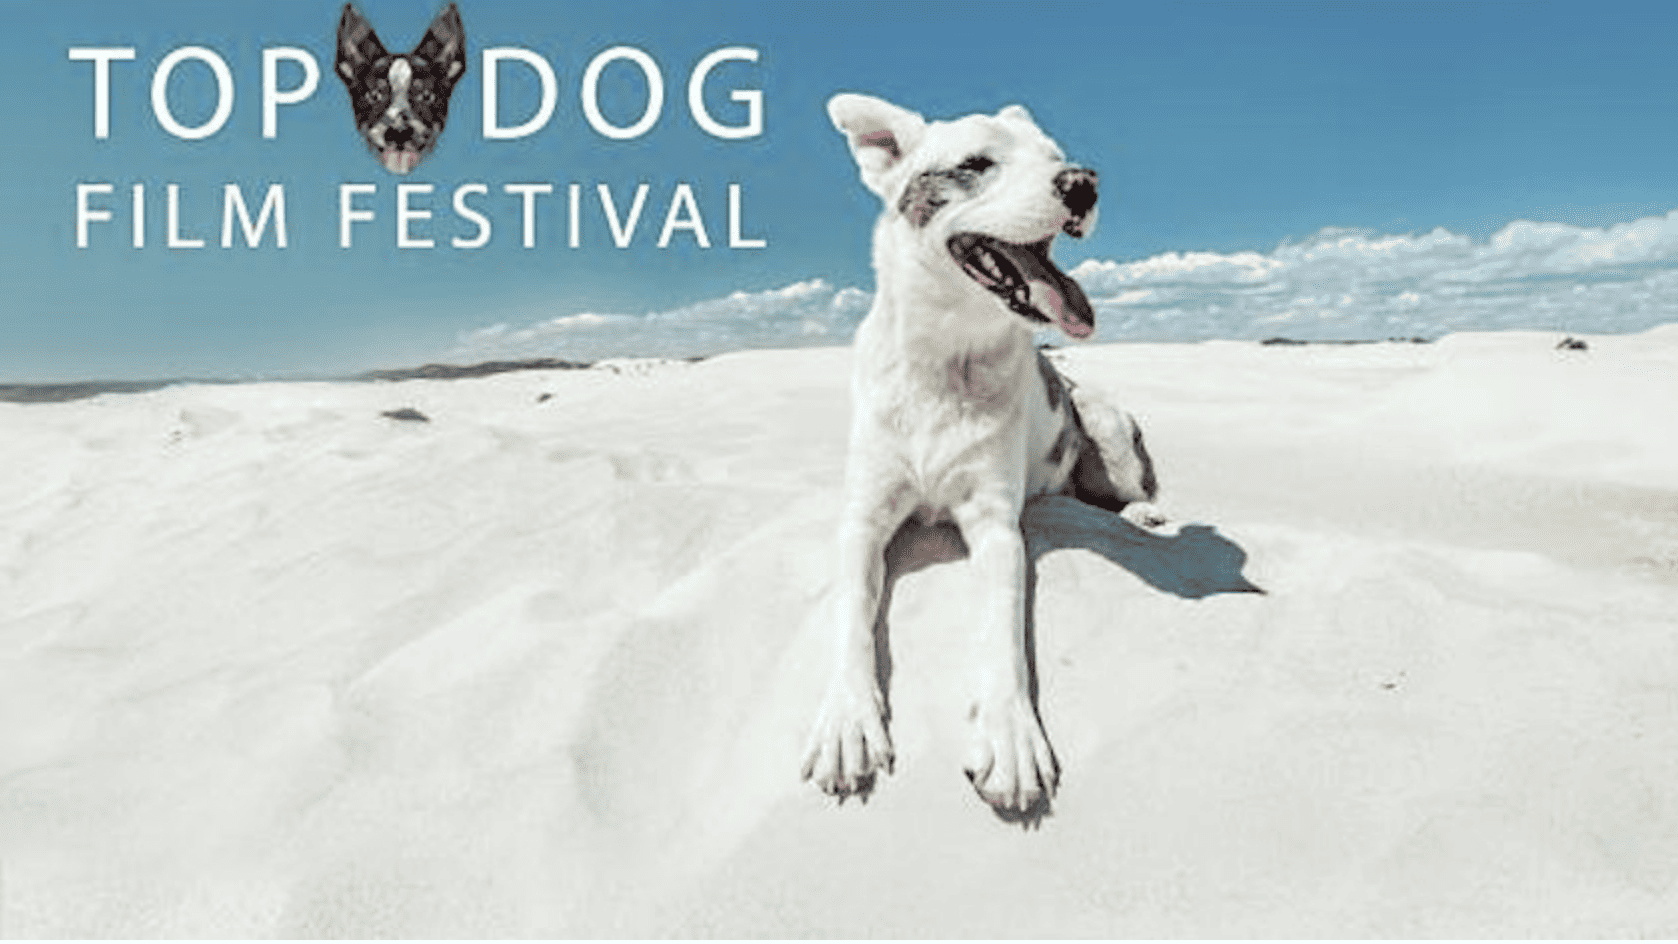 Top Dog Film Festival